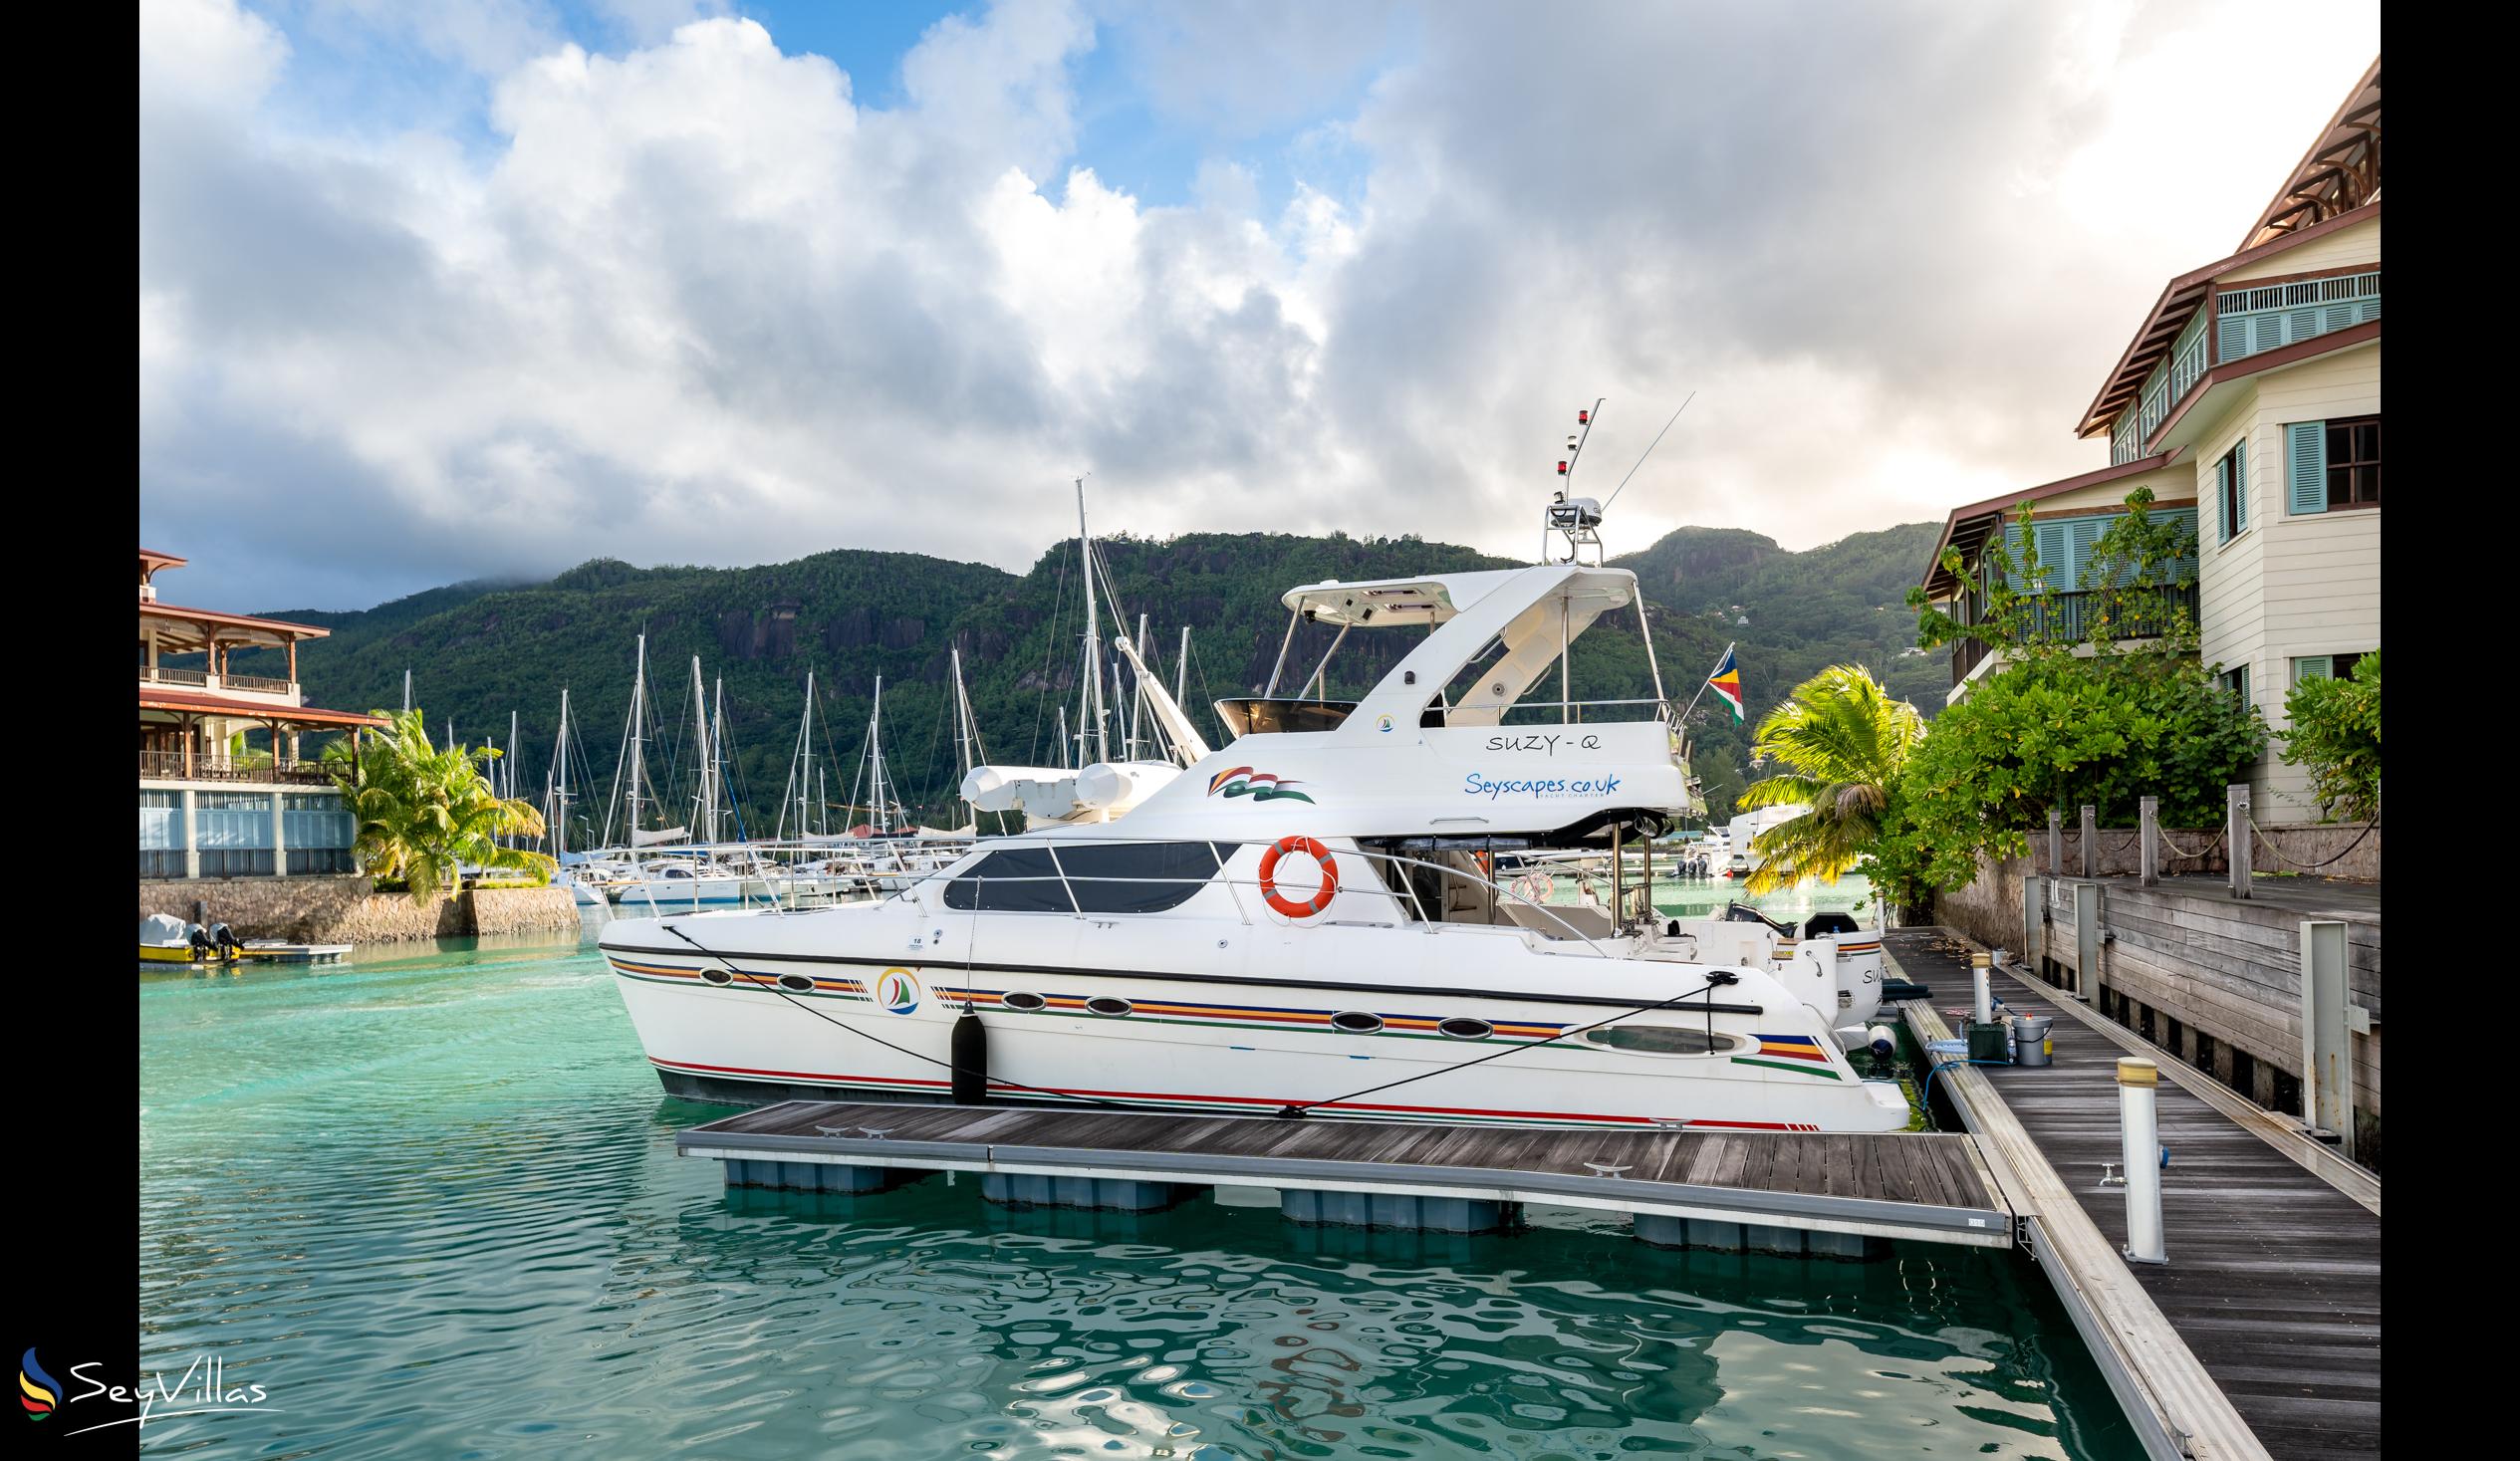 Foto 57: Seyscapes Yacht Charter - Charter completo Suzy Q - Seychelles (Seychelles)